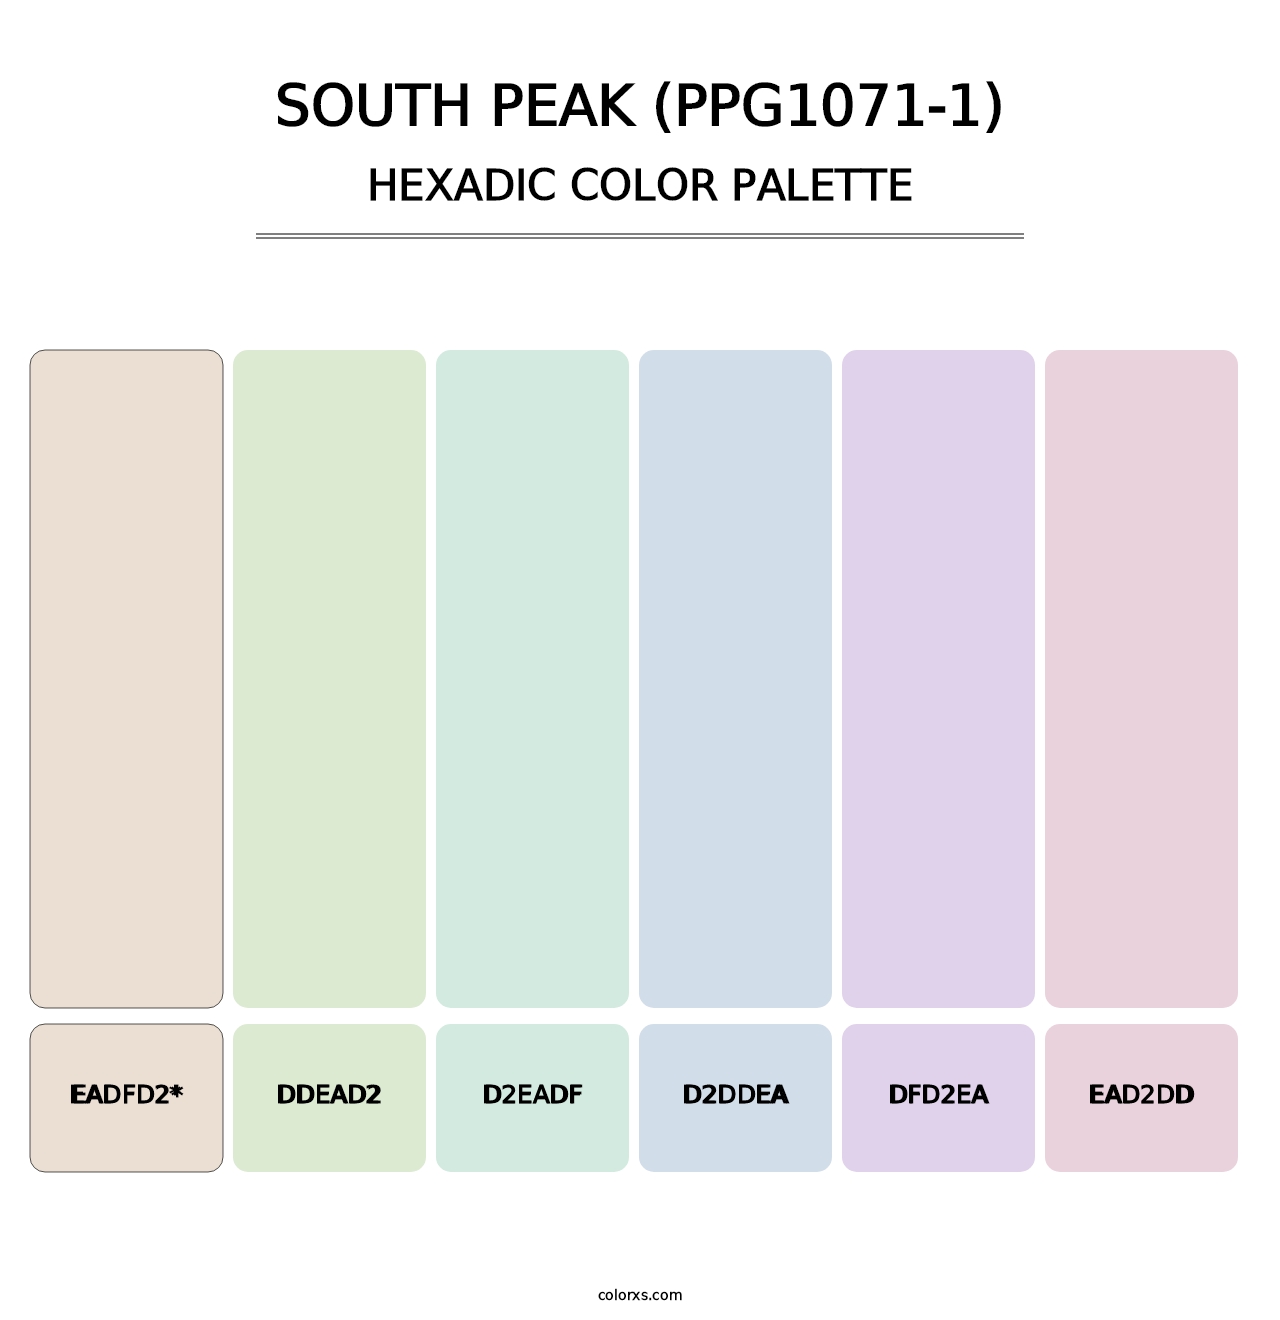 South Peak (PPG1071-1) - Hexadic Color Palette